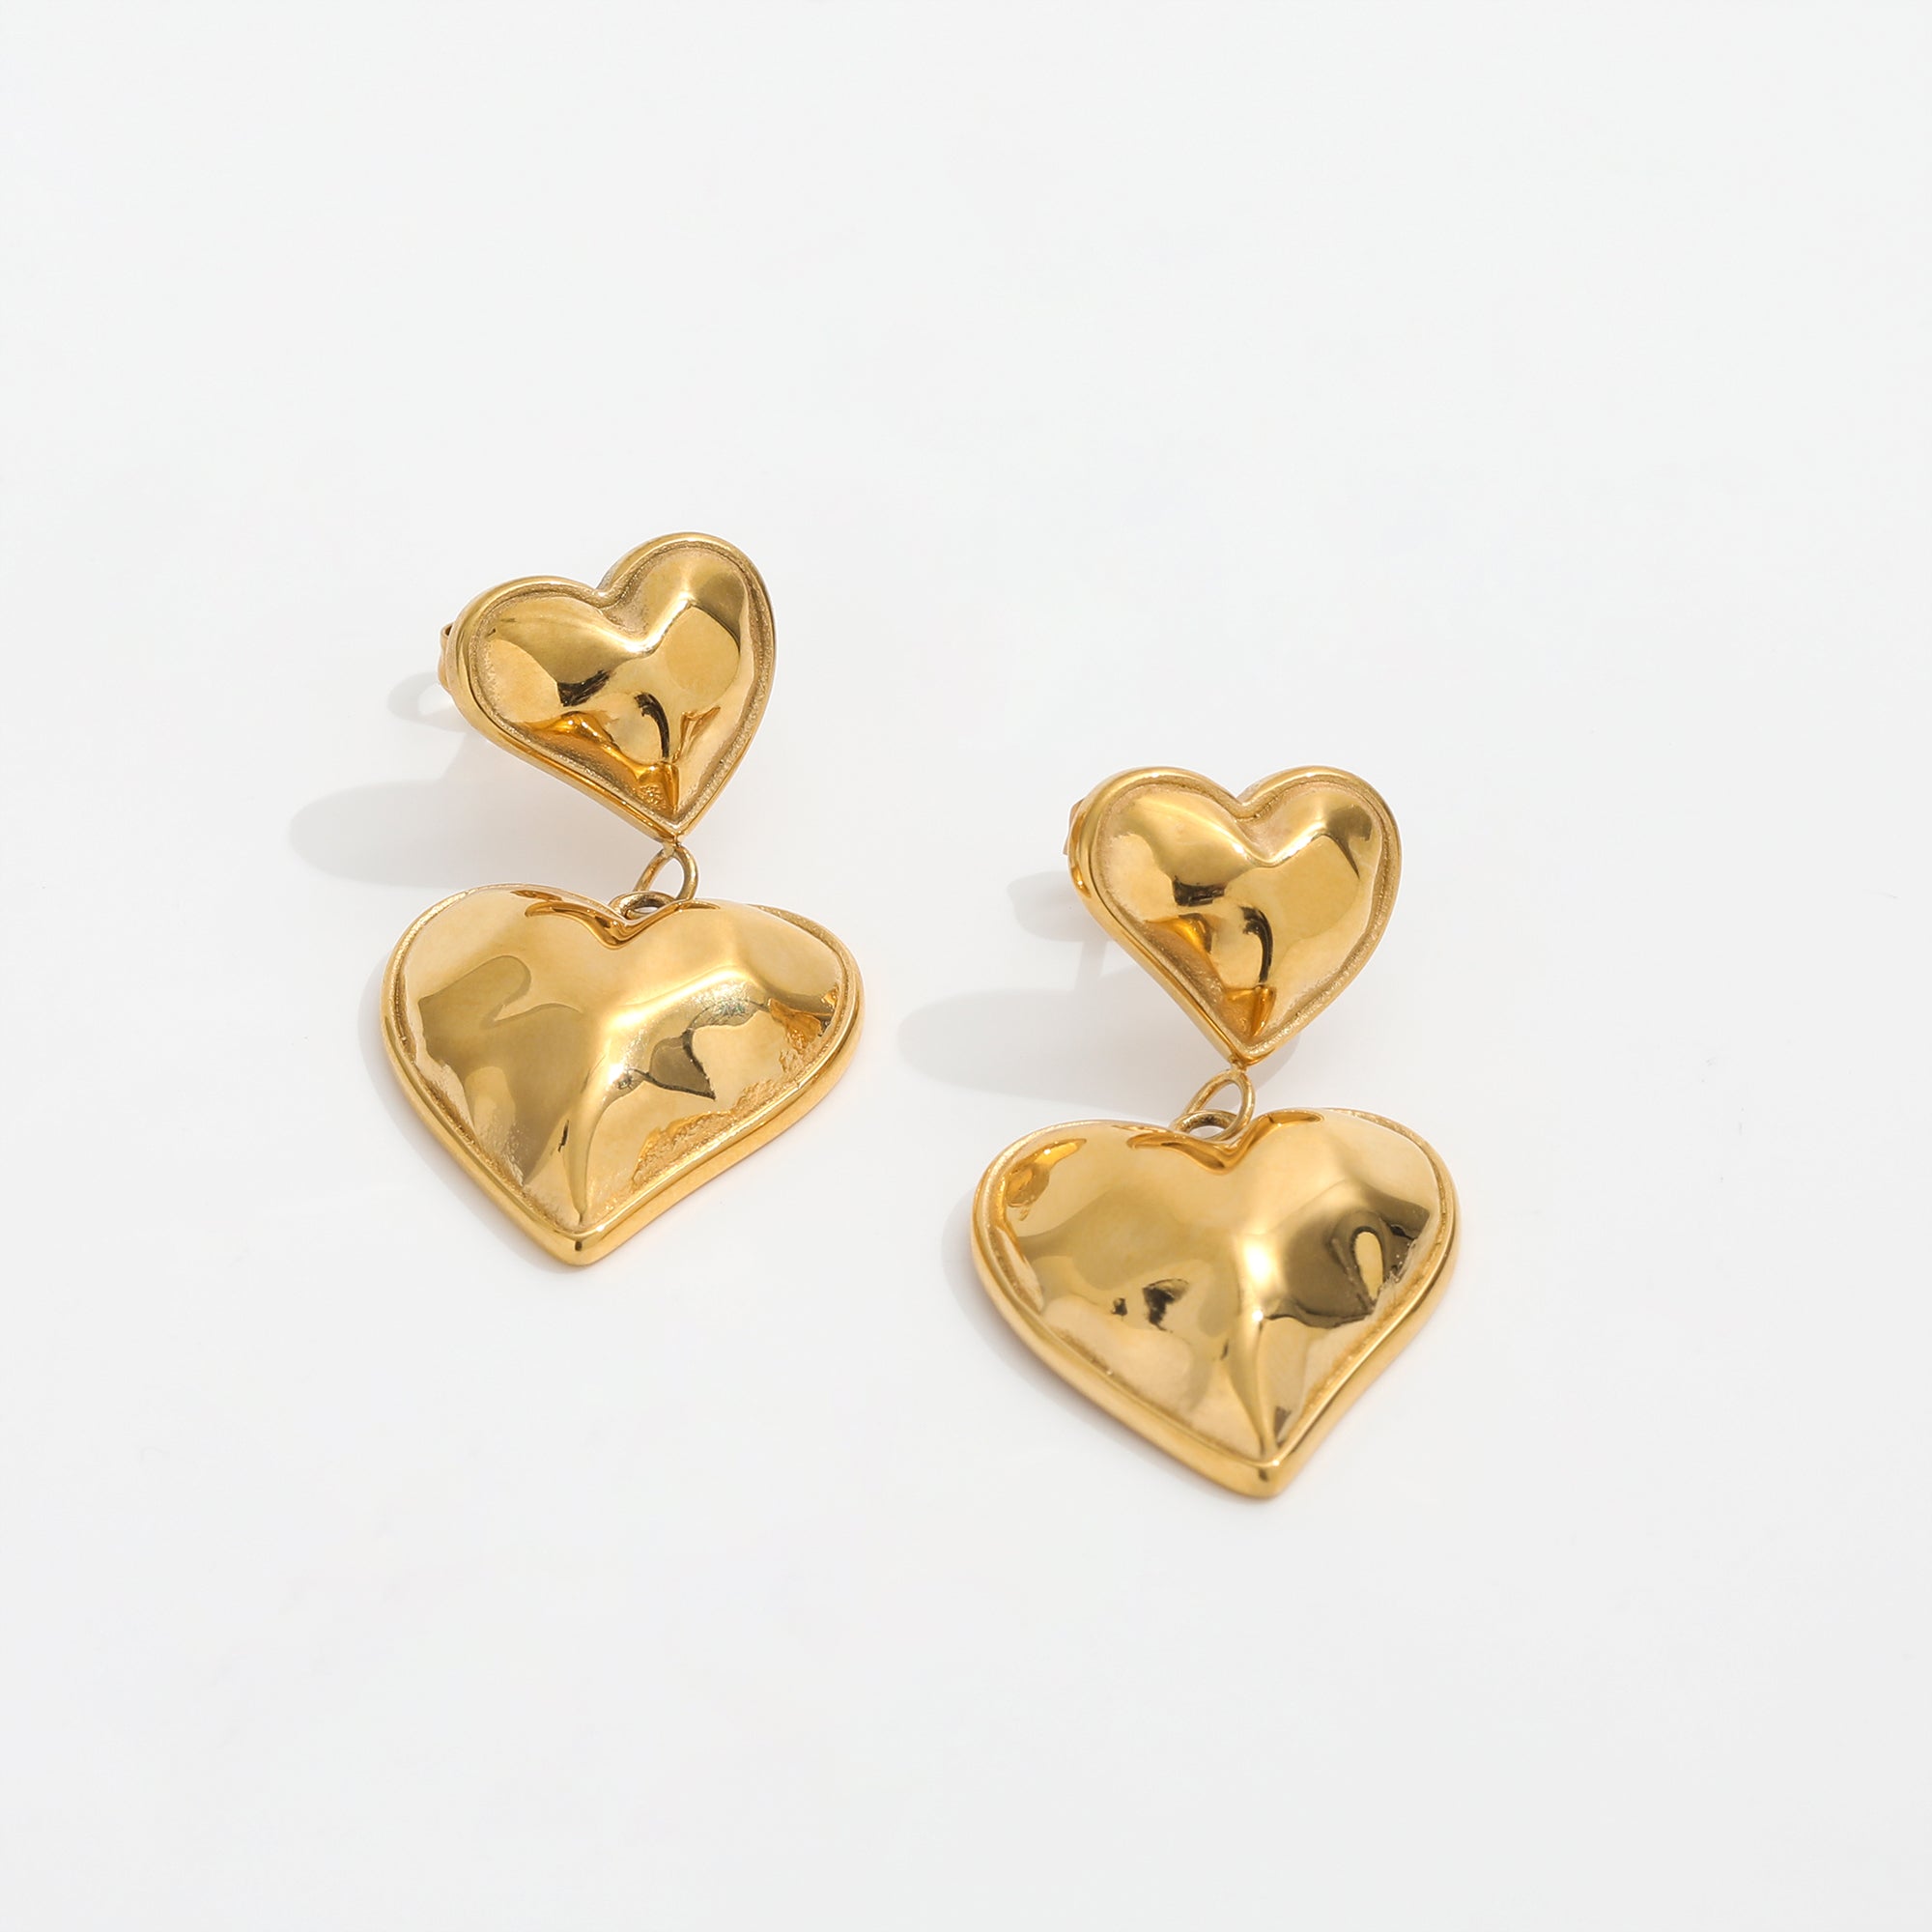 Double Heart Statement Earrings / 18K Gold Plated